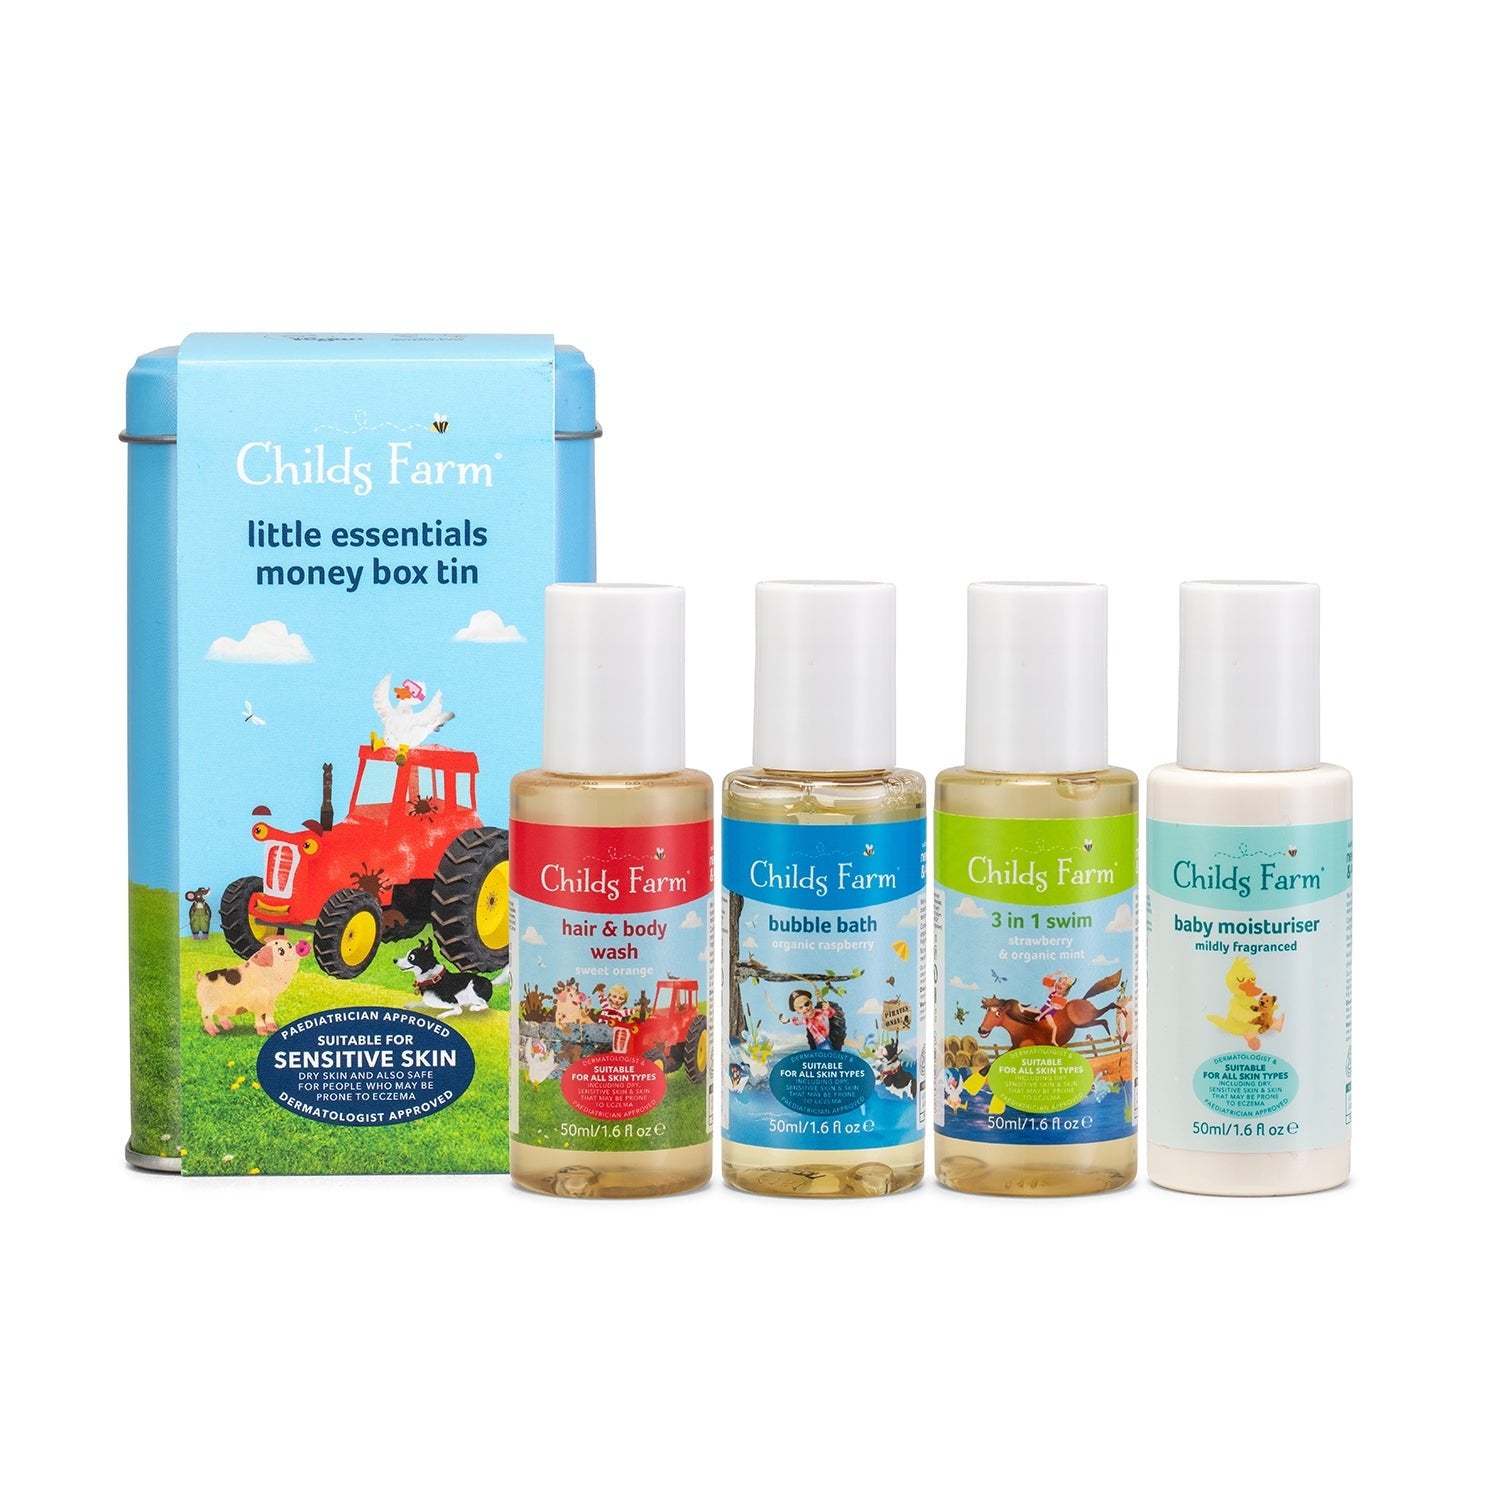 Little Seed Farm - Mini Essential Body Oil - Coconut – shopURSA